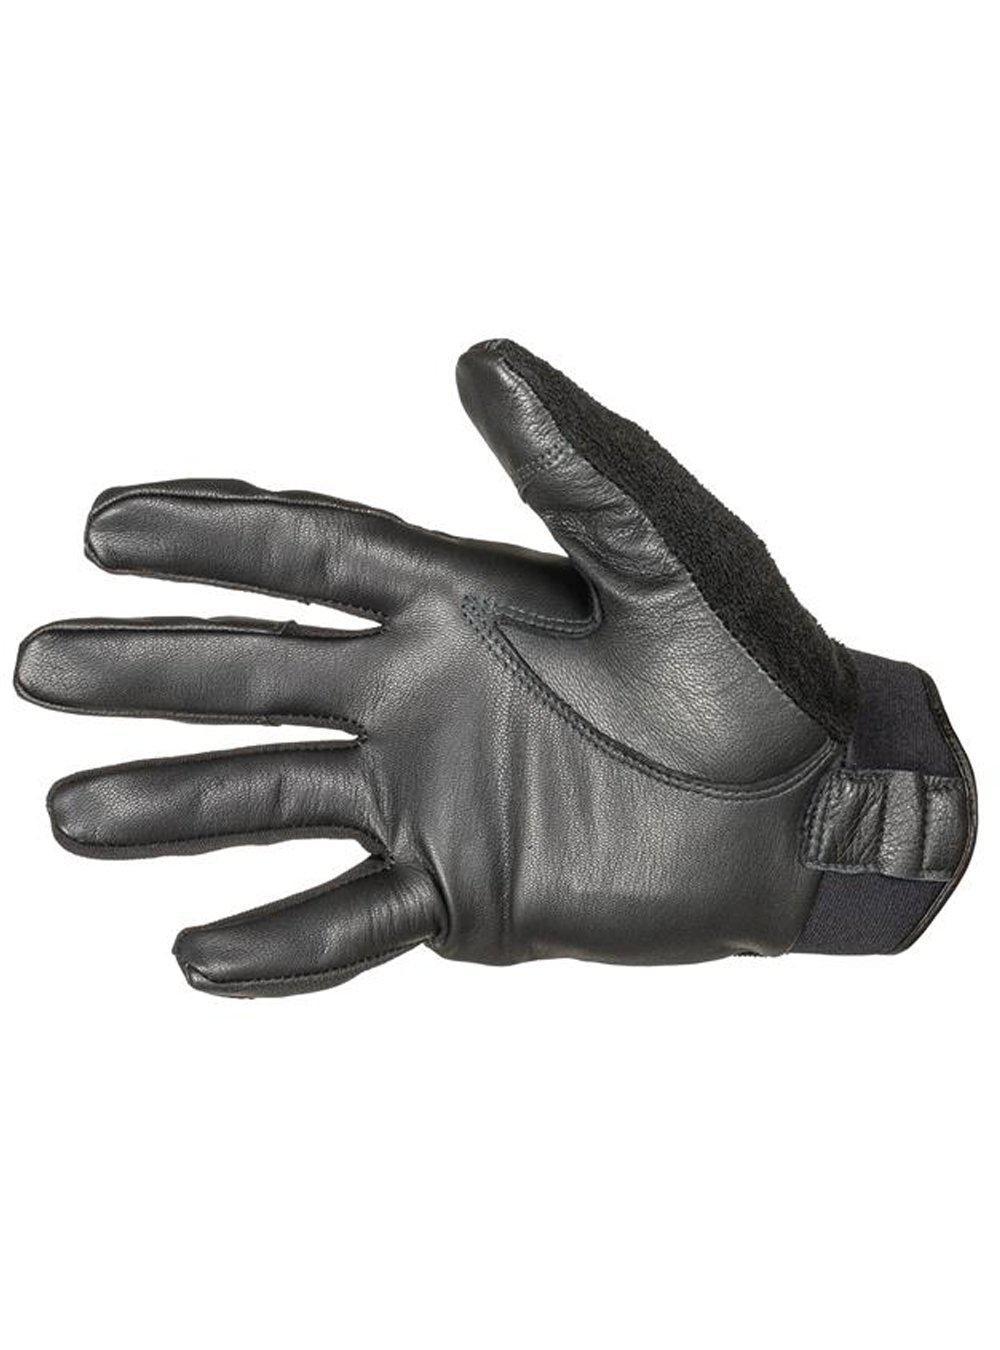 5.11 Tactical Hard Times 2 Glove - Black - TacSource